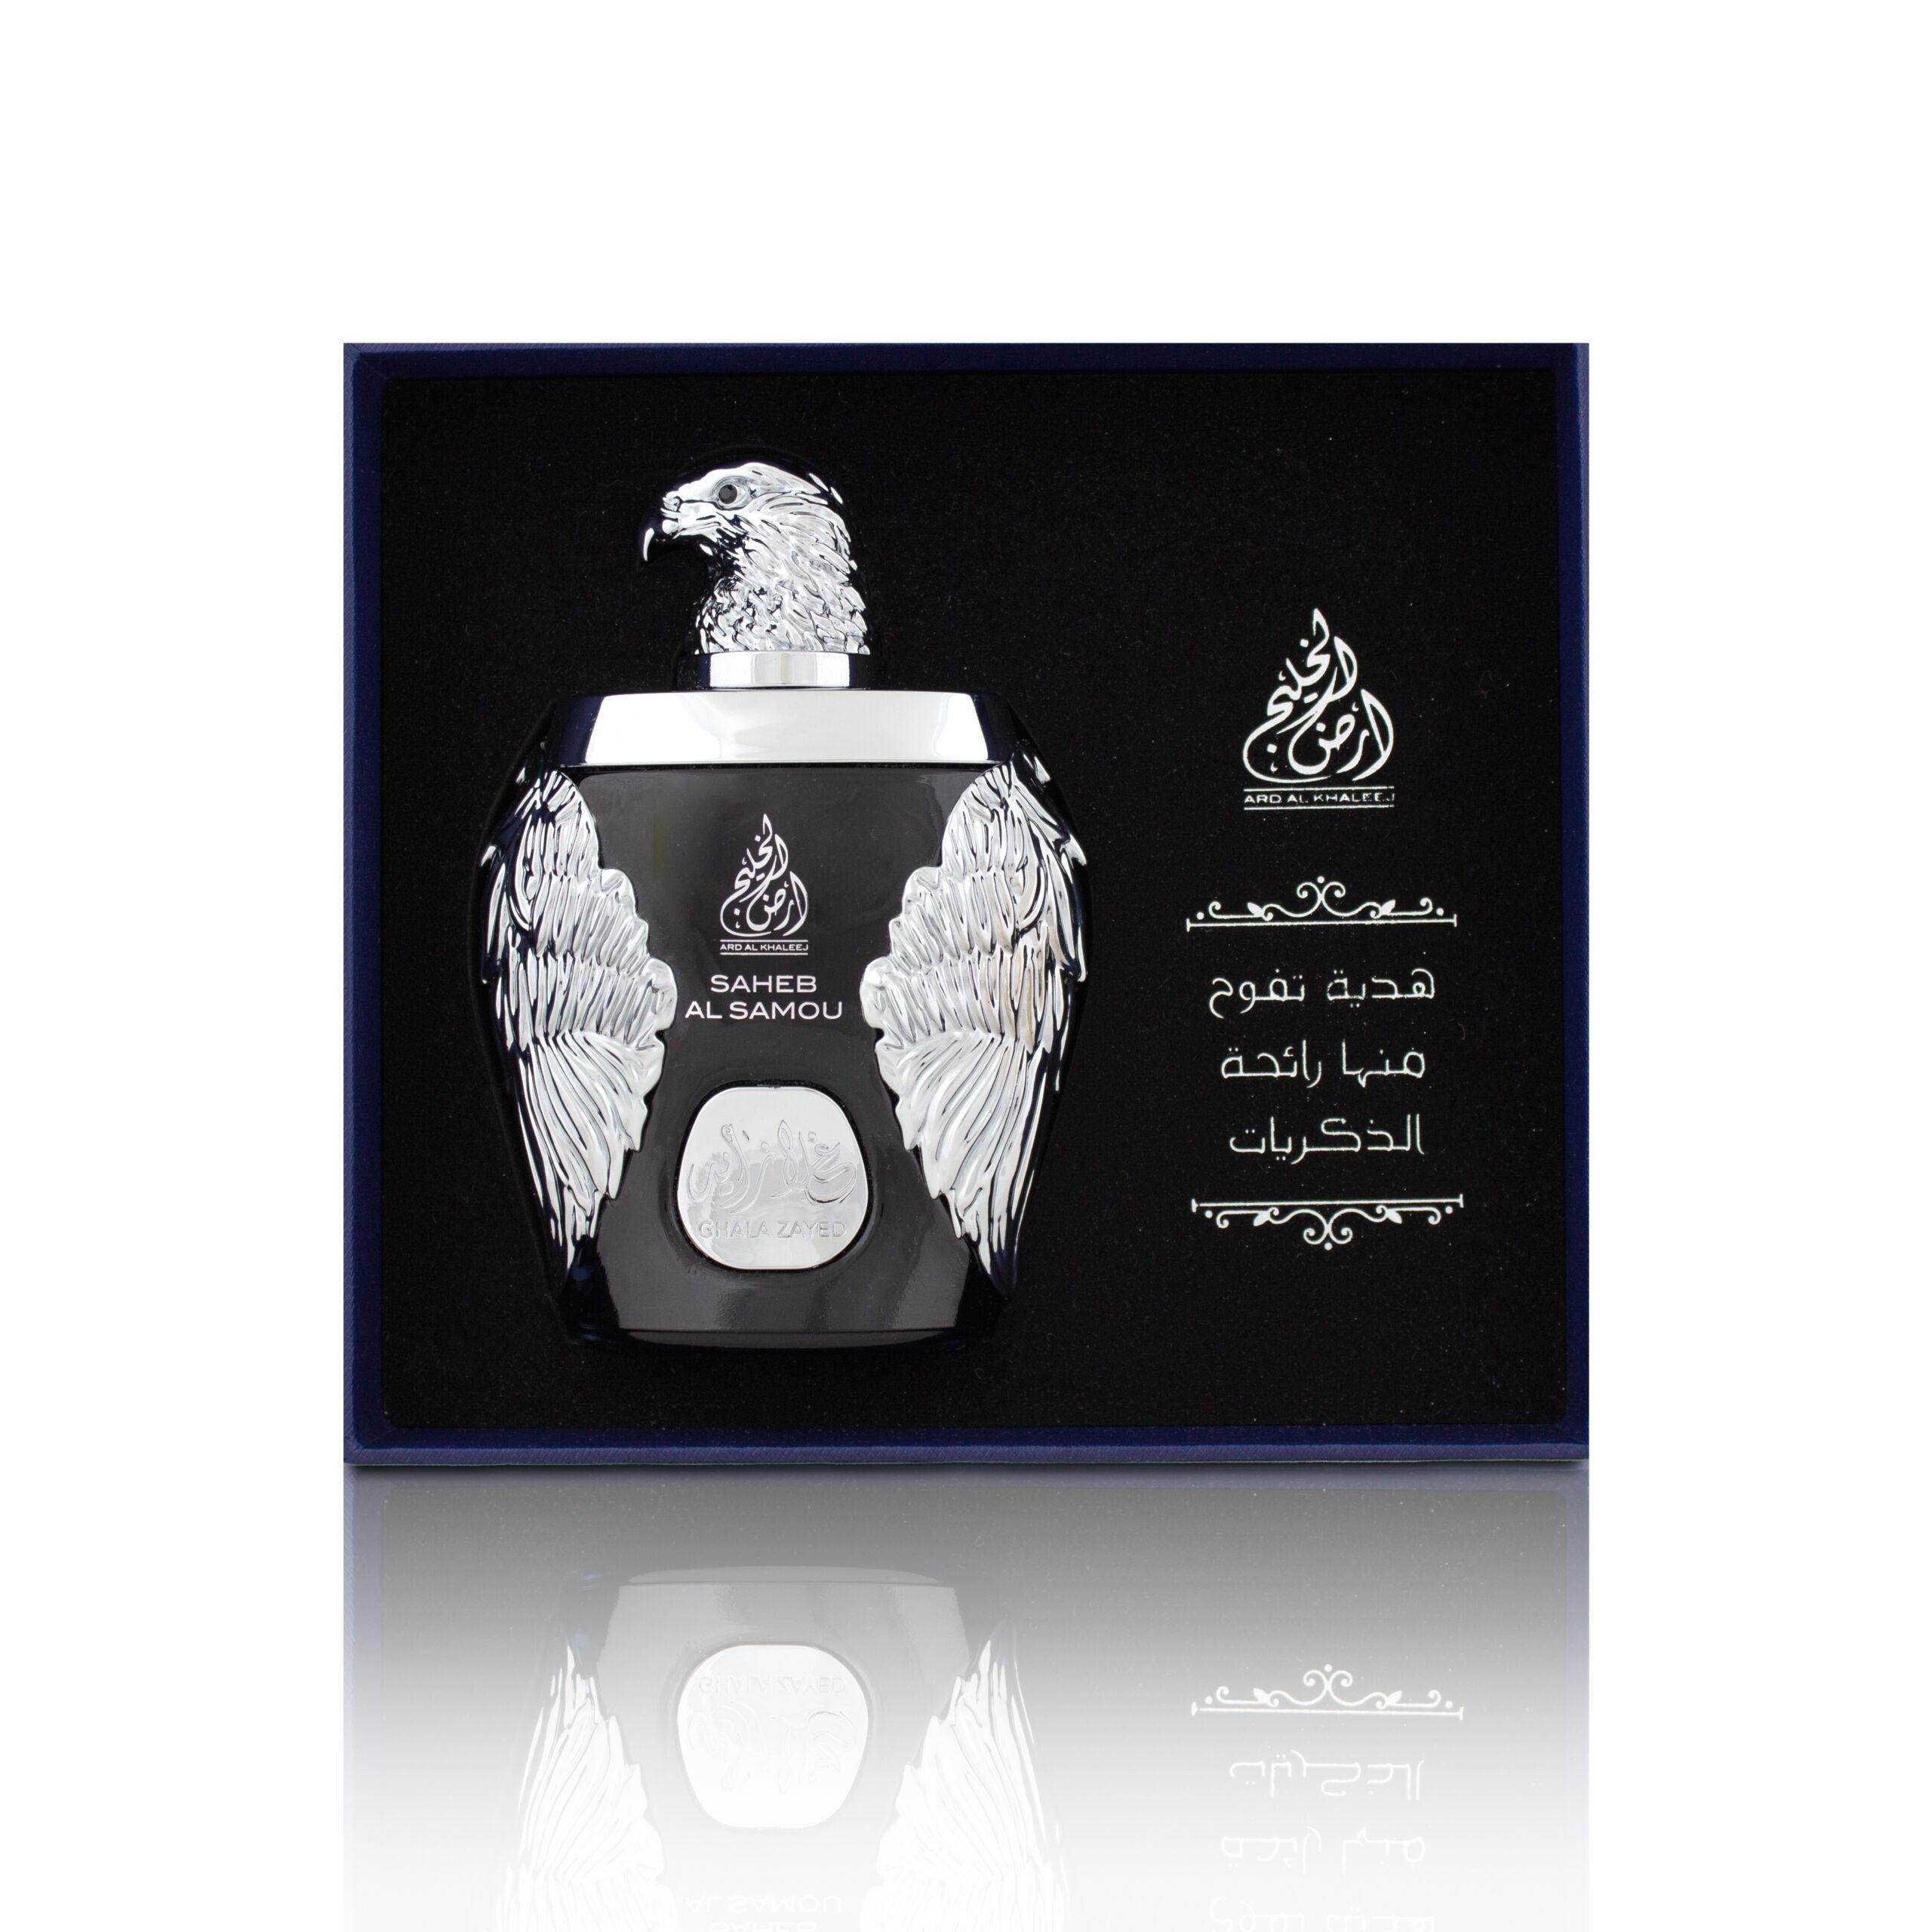 Ghala Zayed Luxury Saheb Al Samou Perfume / Eau De Parfum 100Ml By Ard Al Khaleej